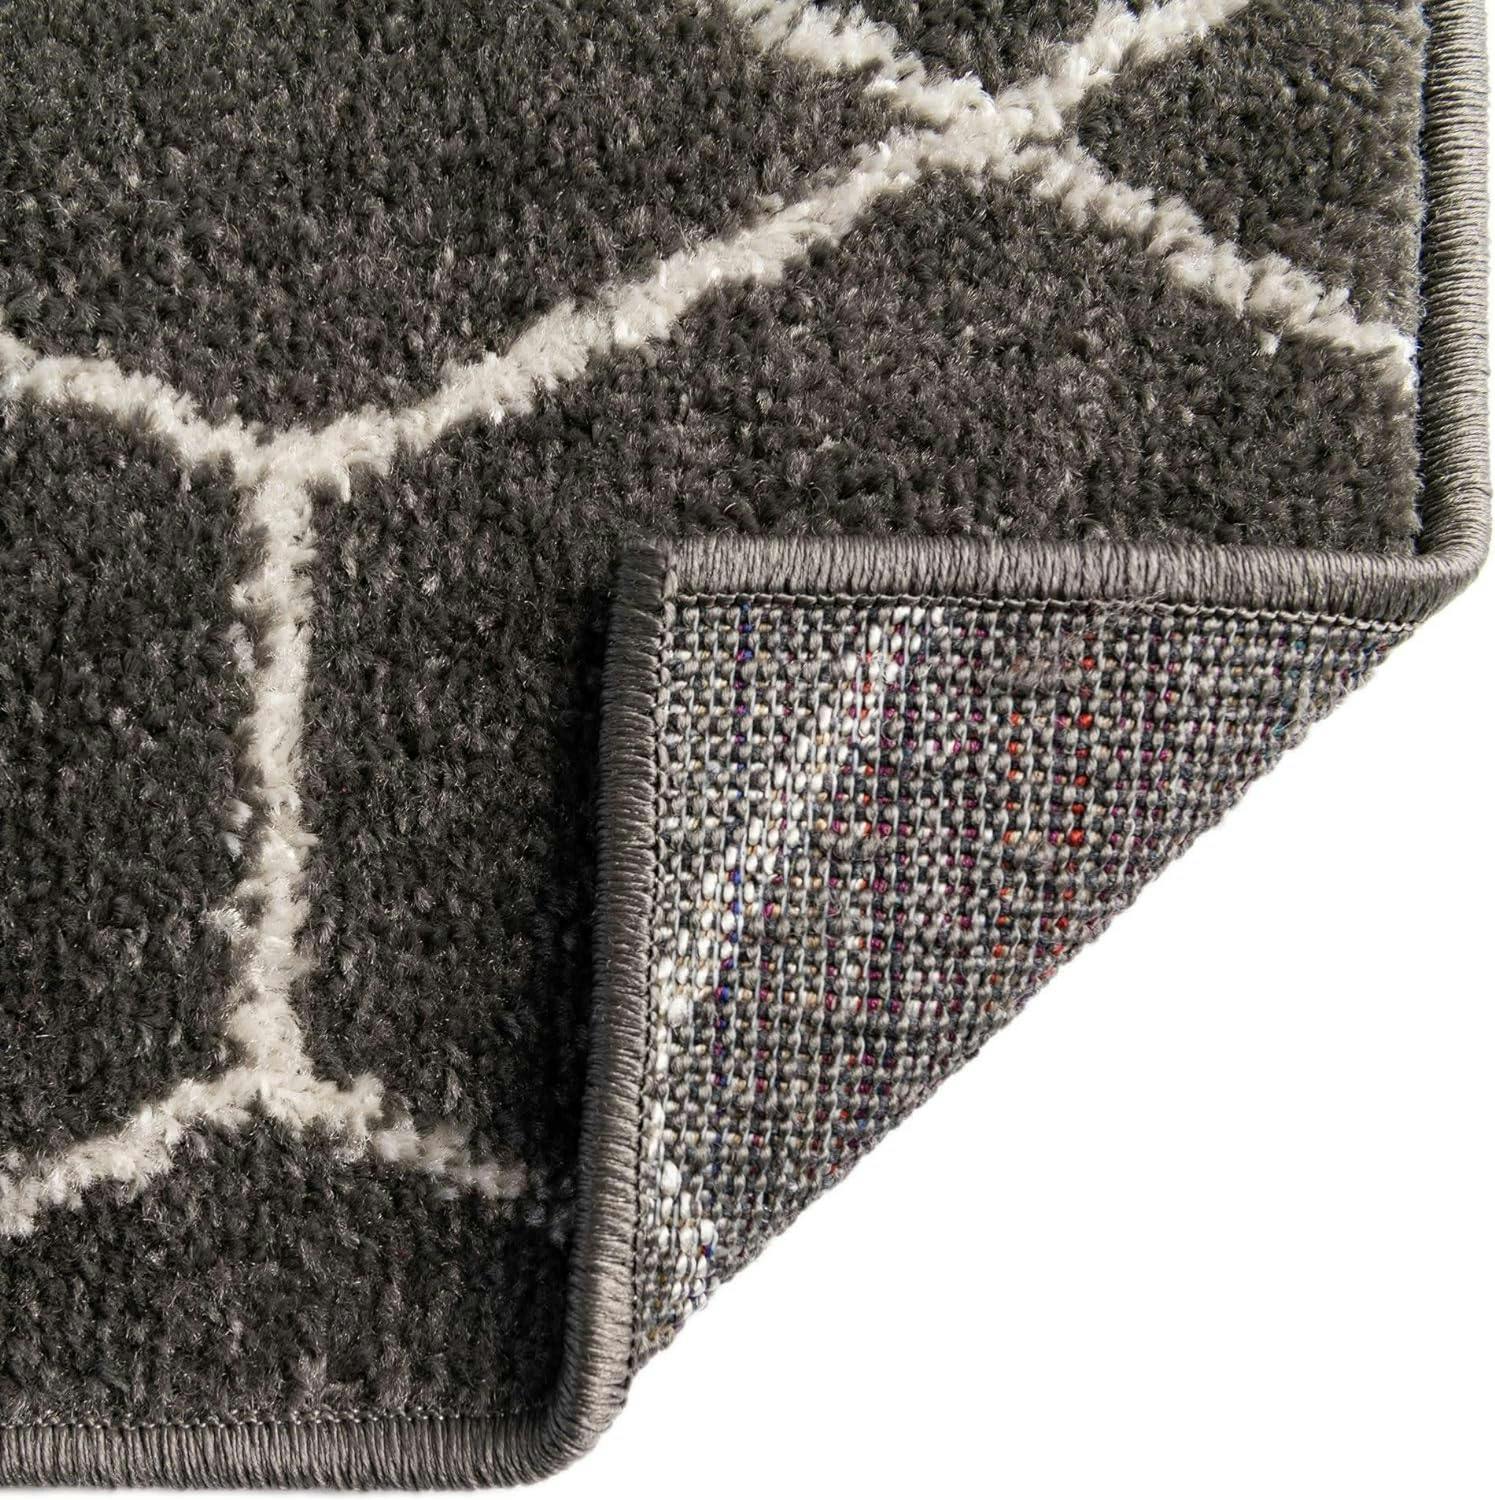 Trellis Frieze Dark Gray 3' Square Synthetic Area Rug